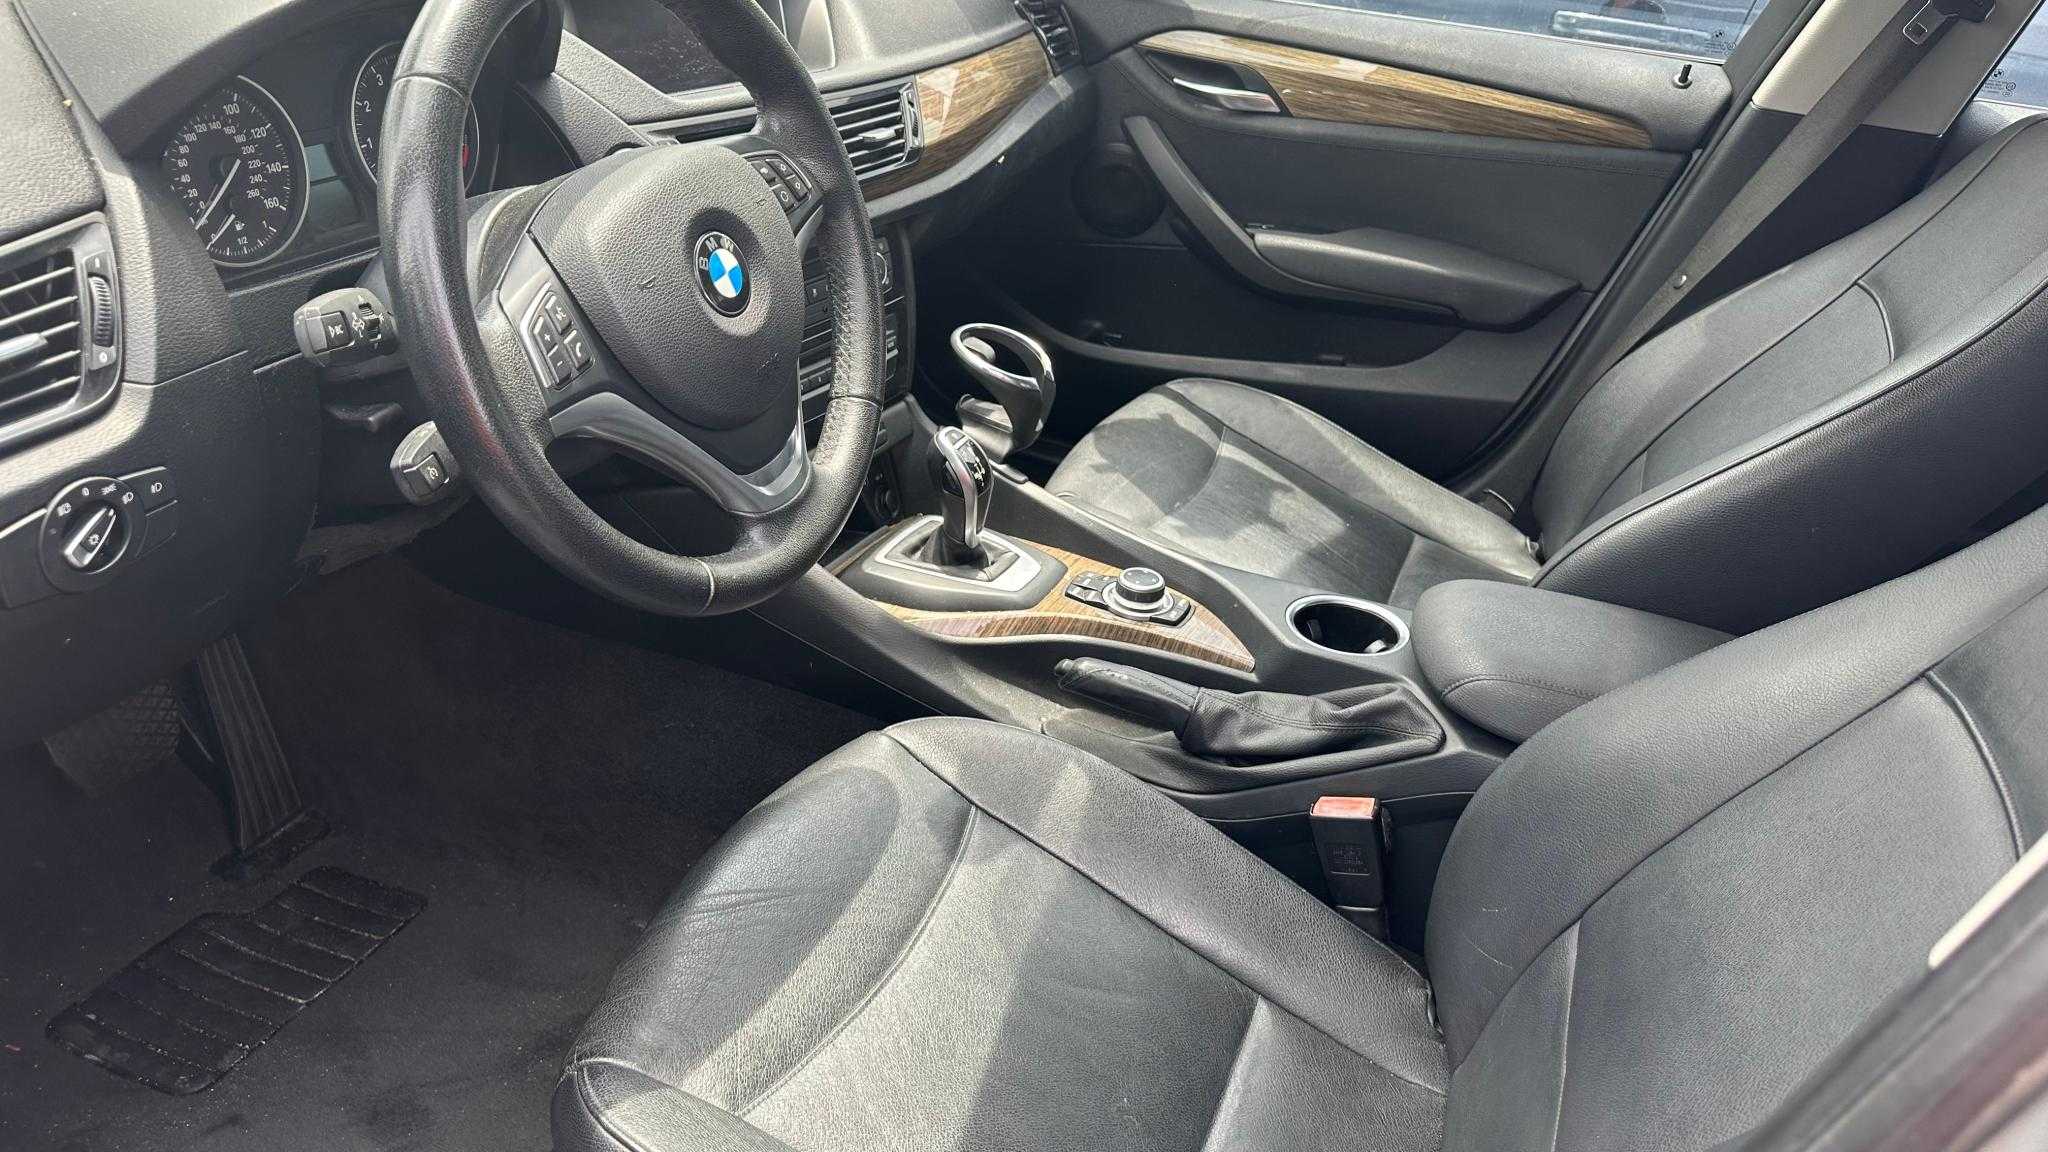 BMW X1 Image 3